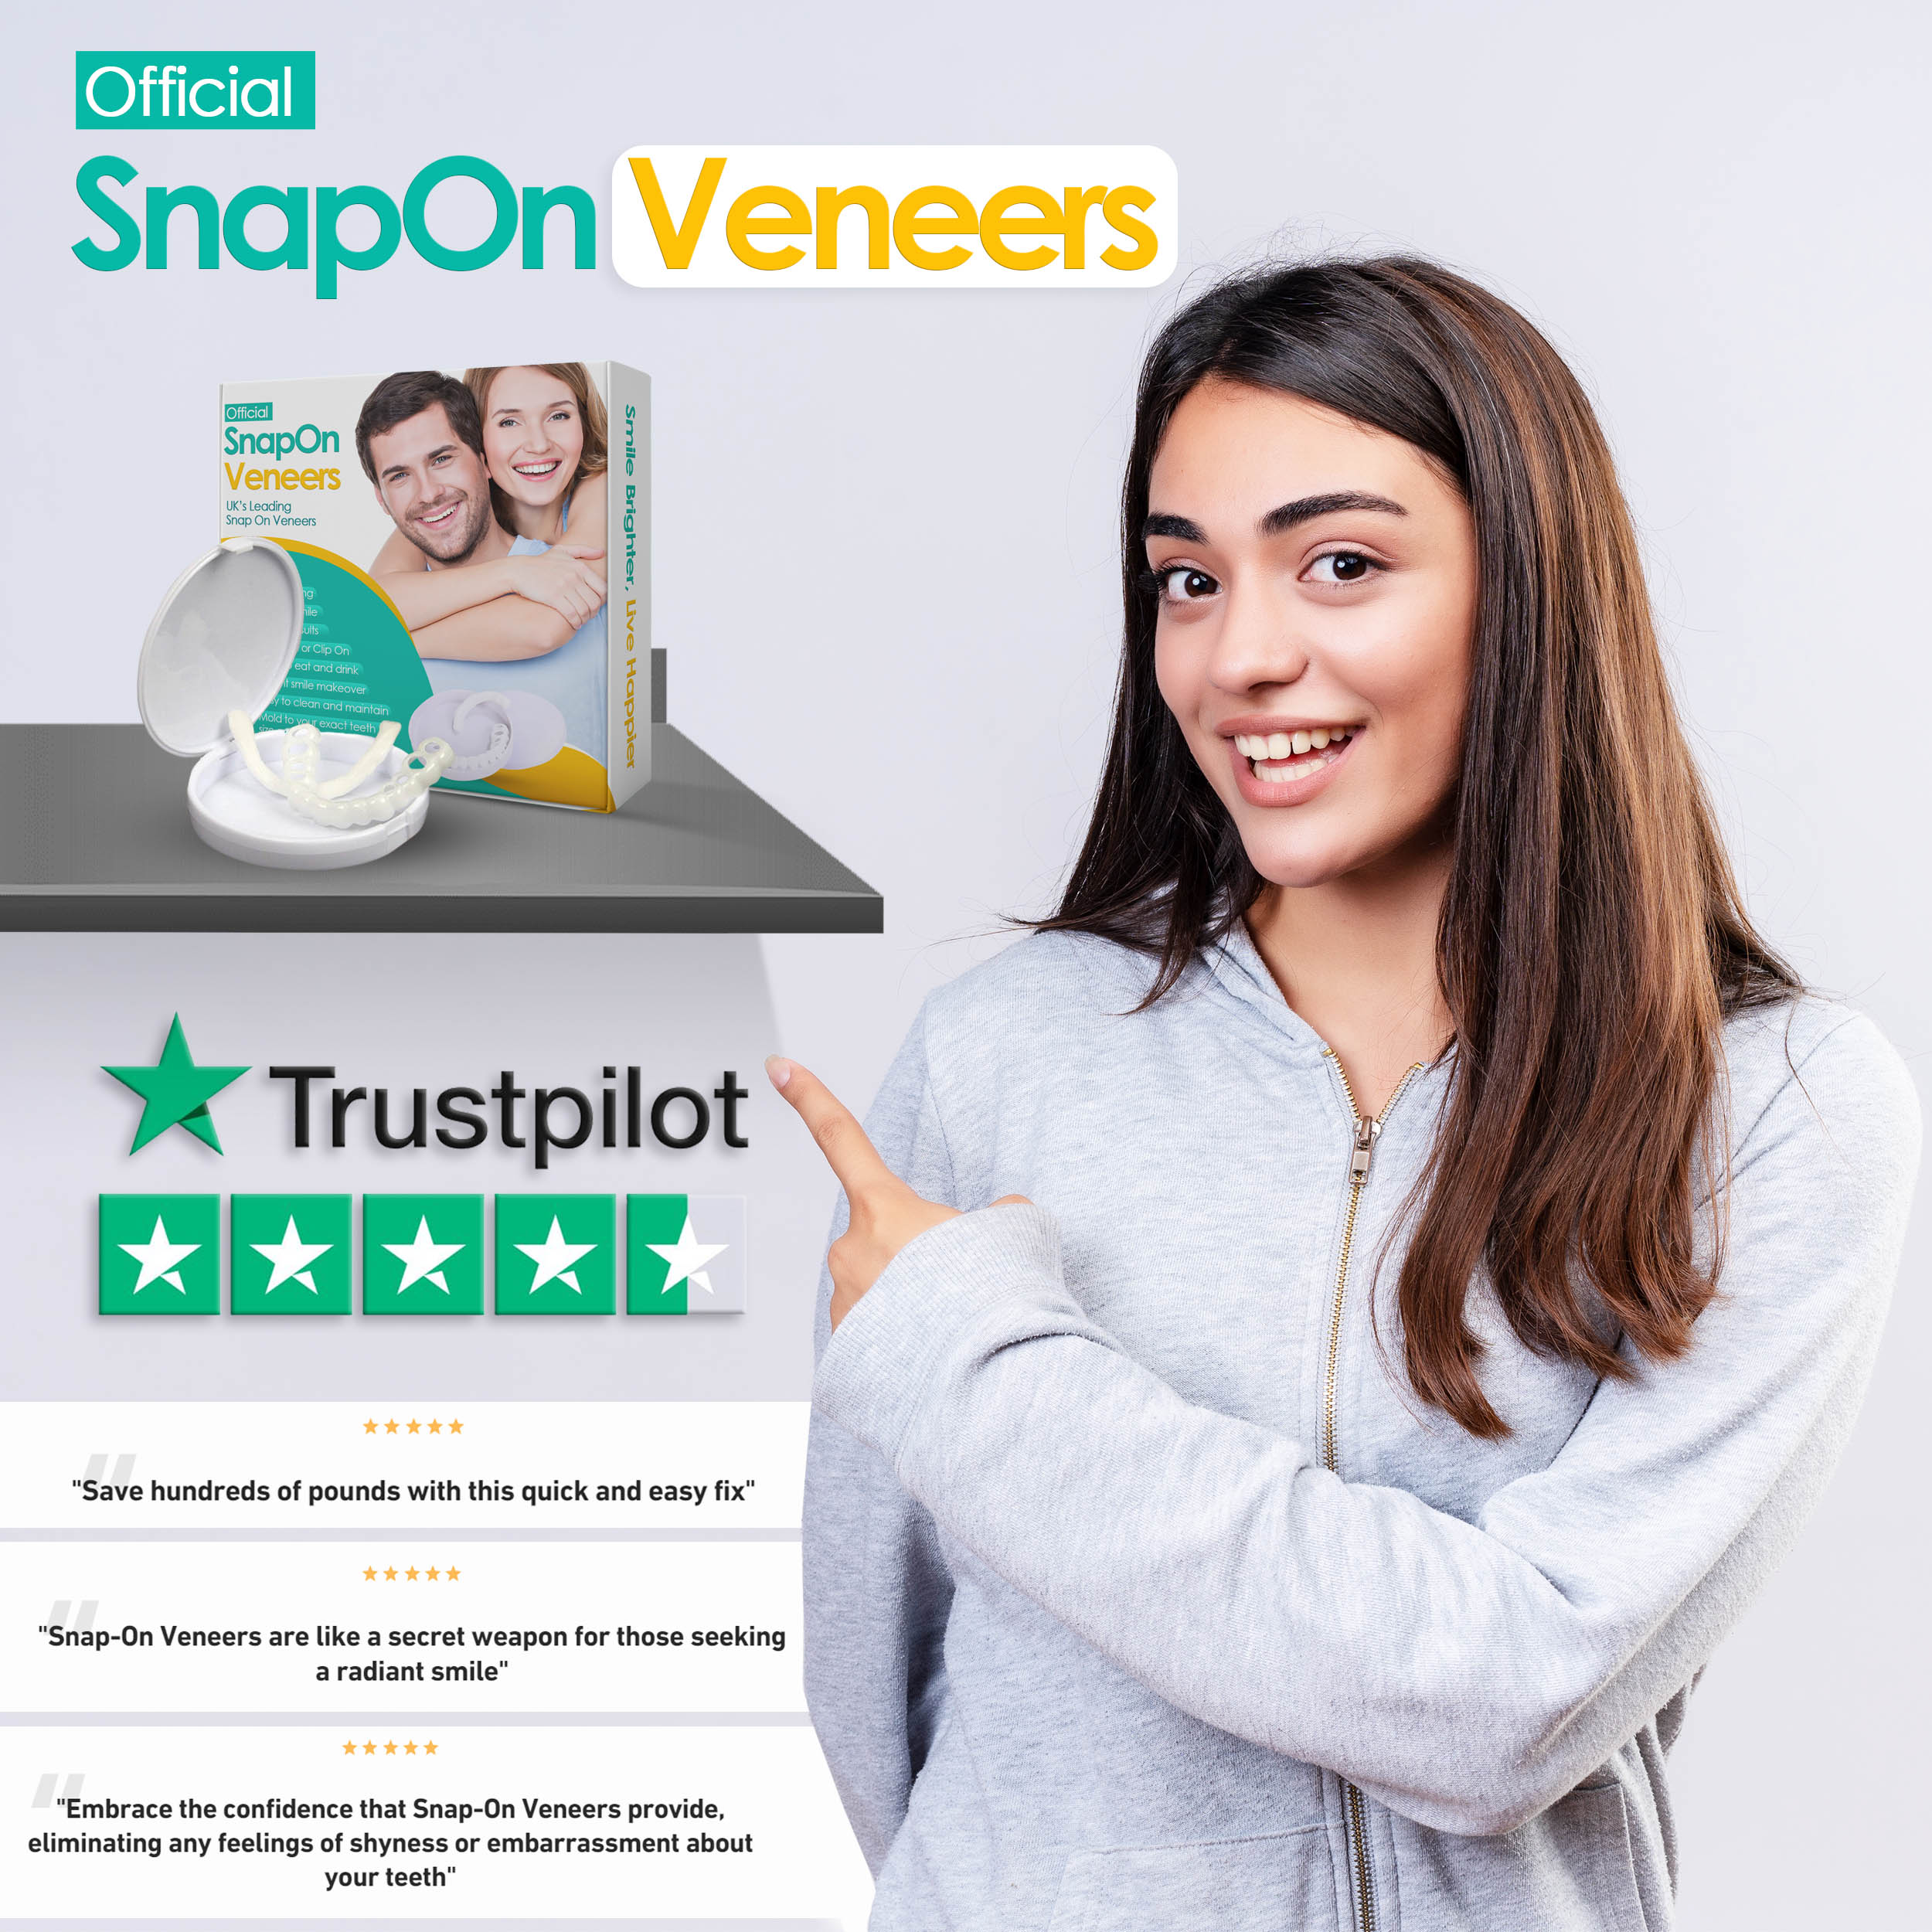 Official SnapOn Veneers